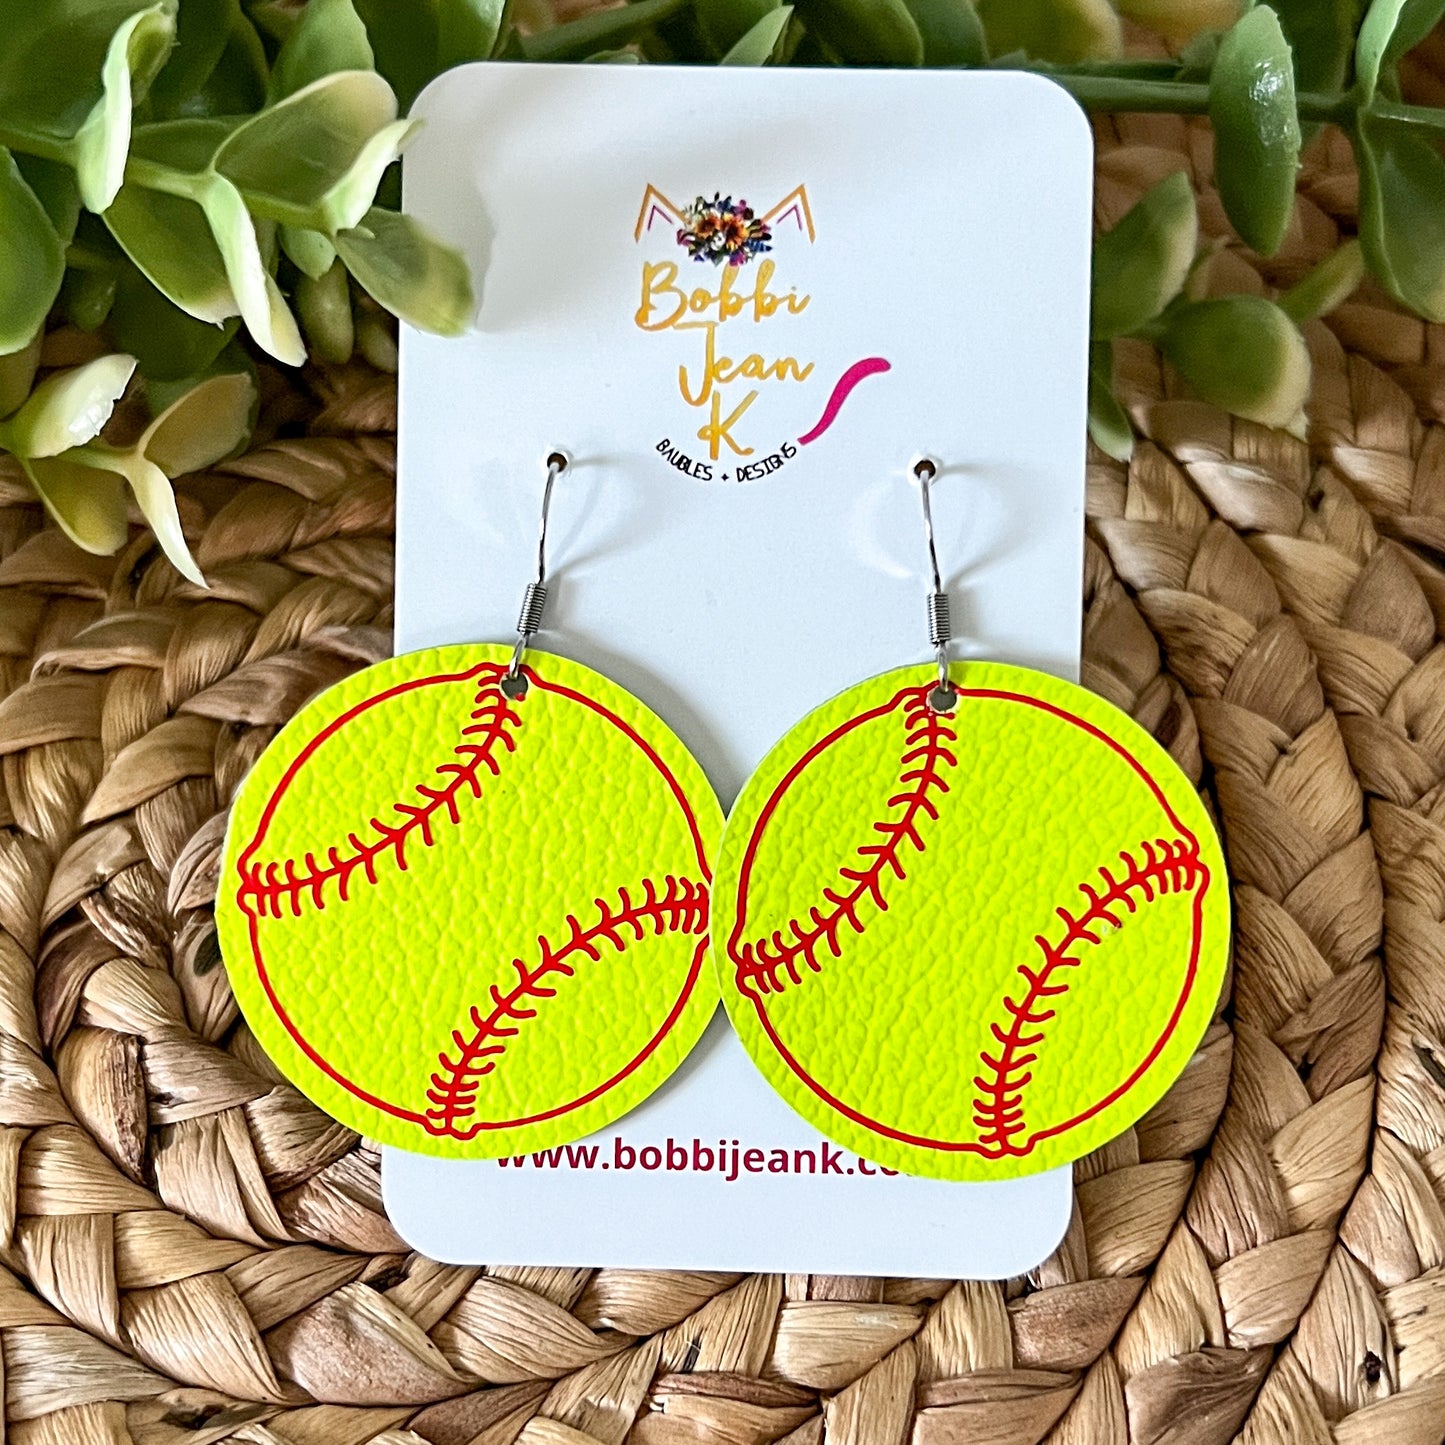 Softball Leather Earrings